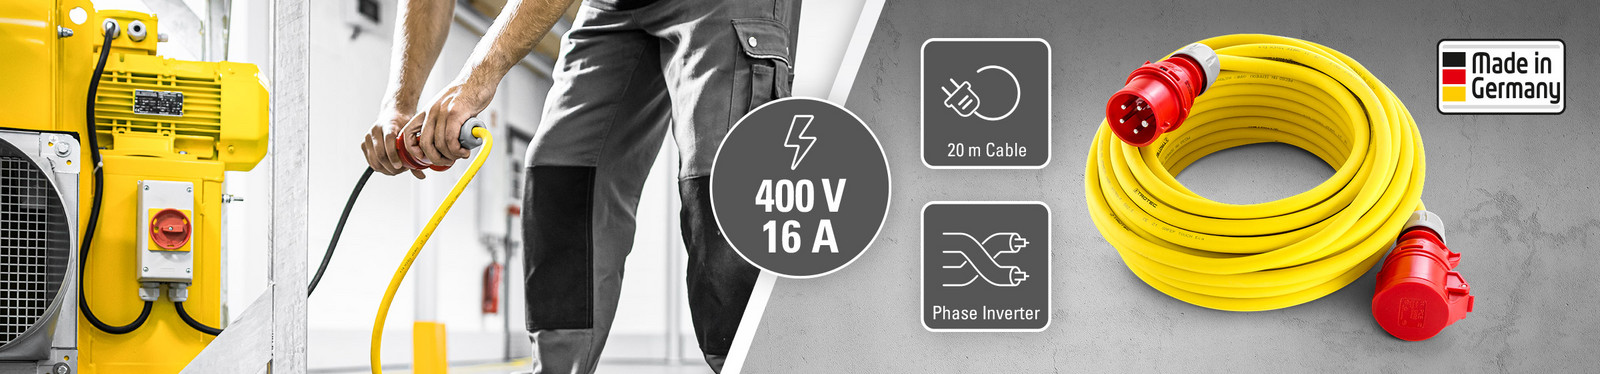 Profesyonel uzatma kablosu 400 V (16 A) – Made in Germany